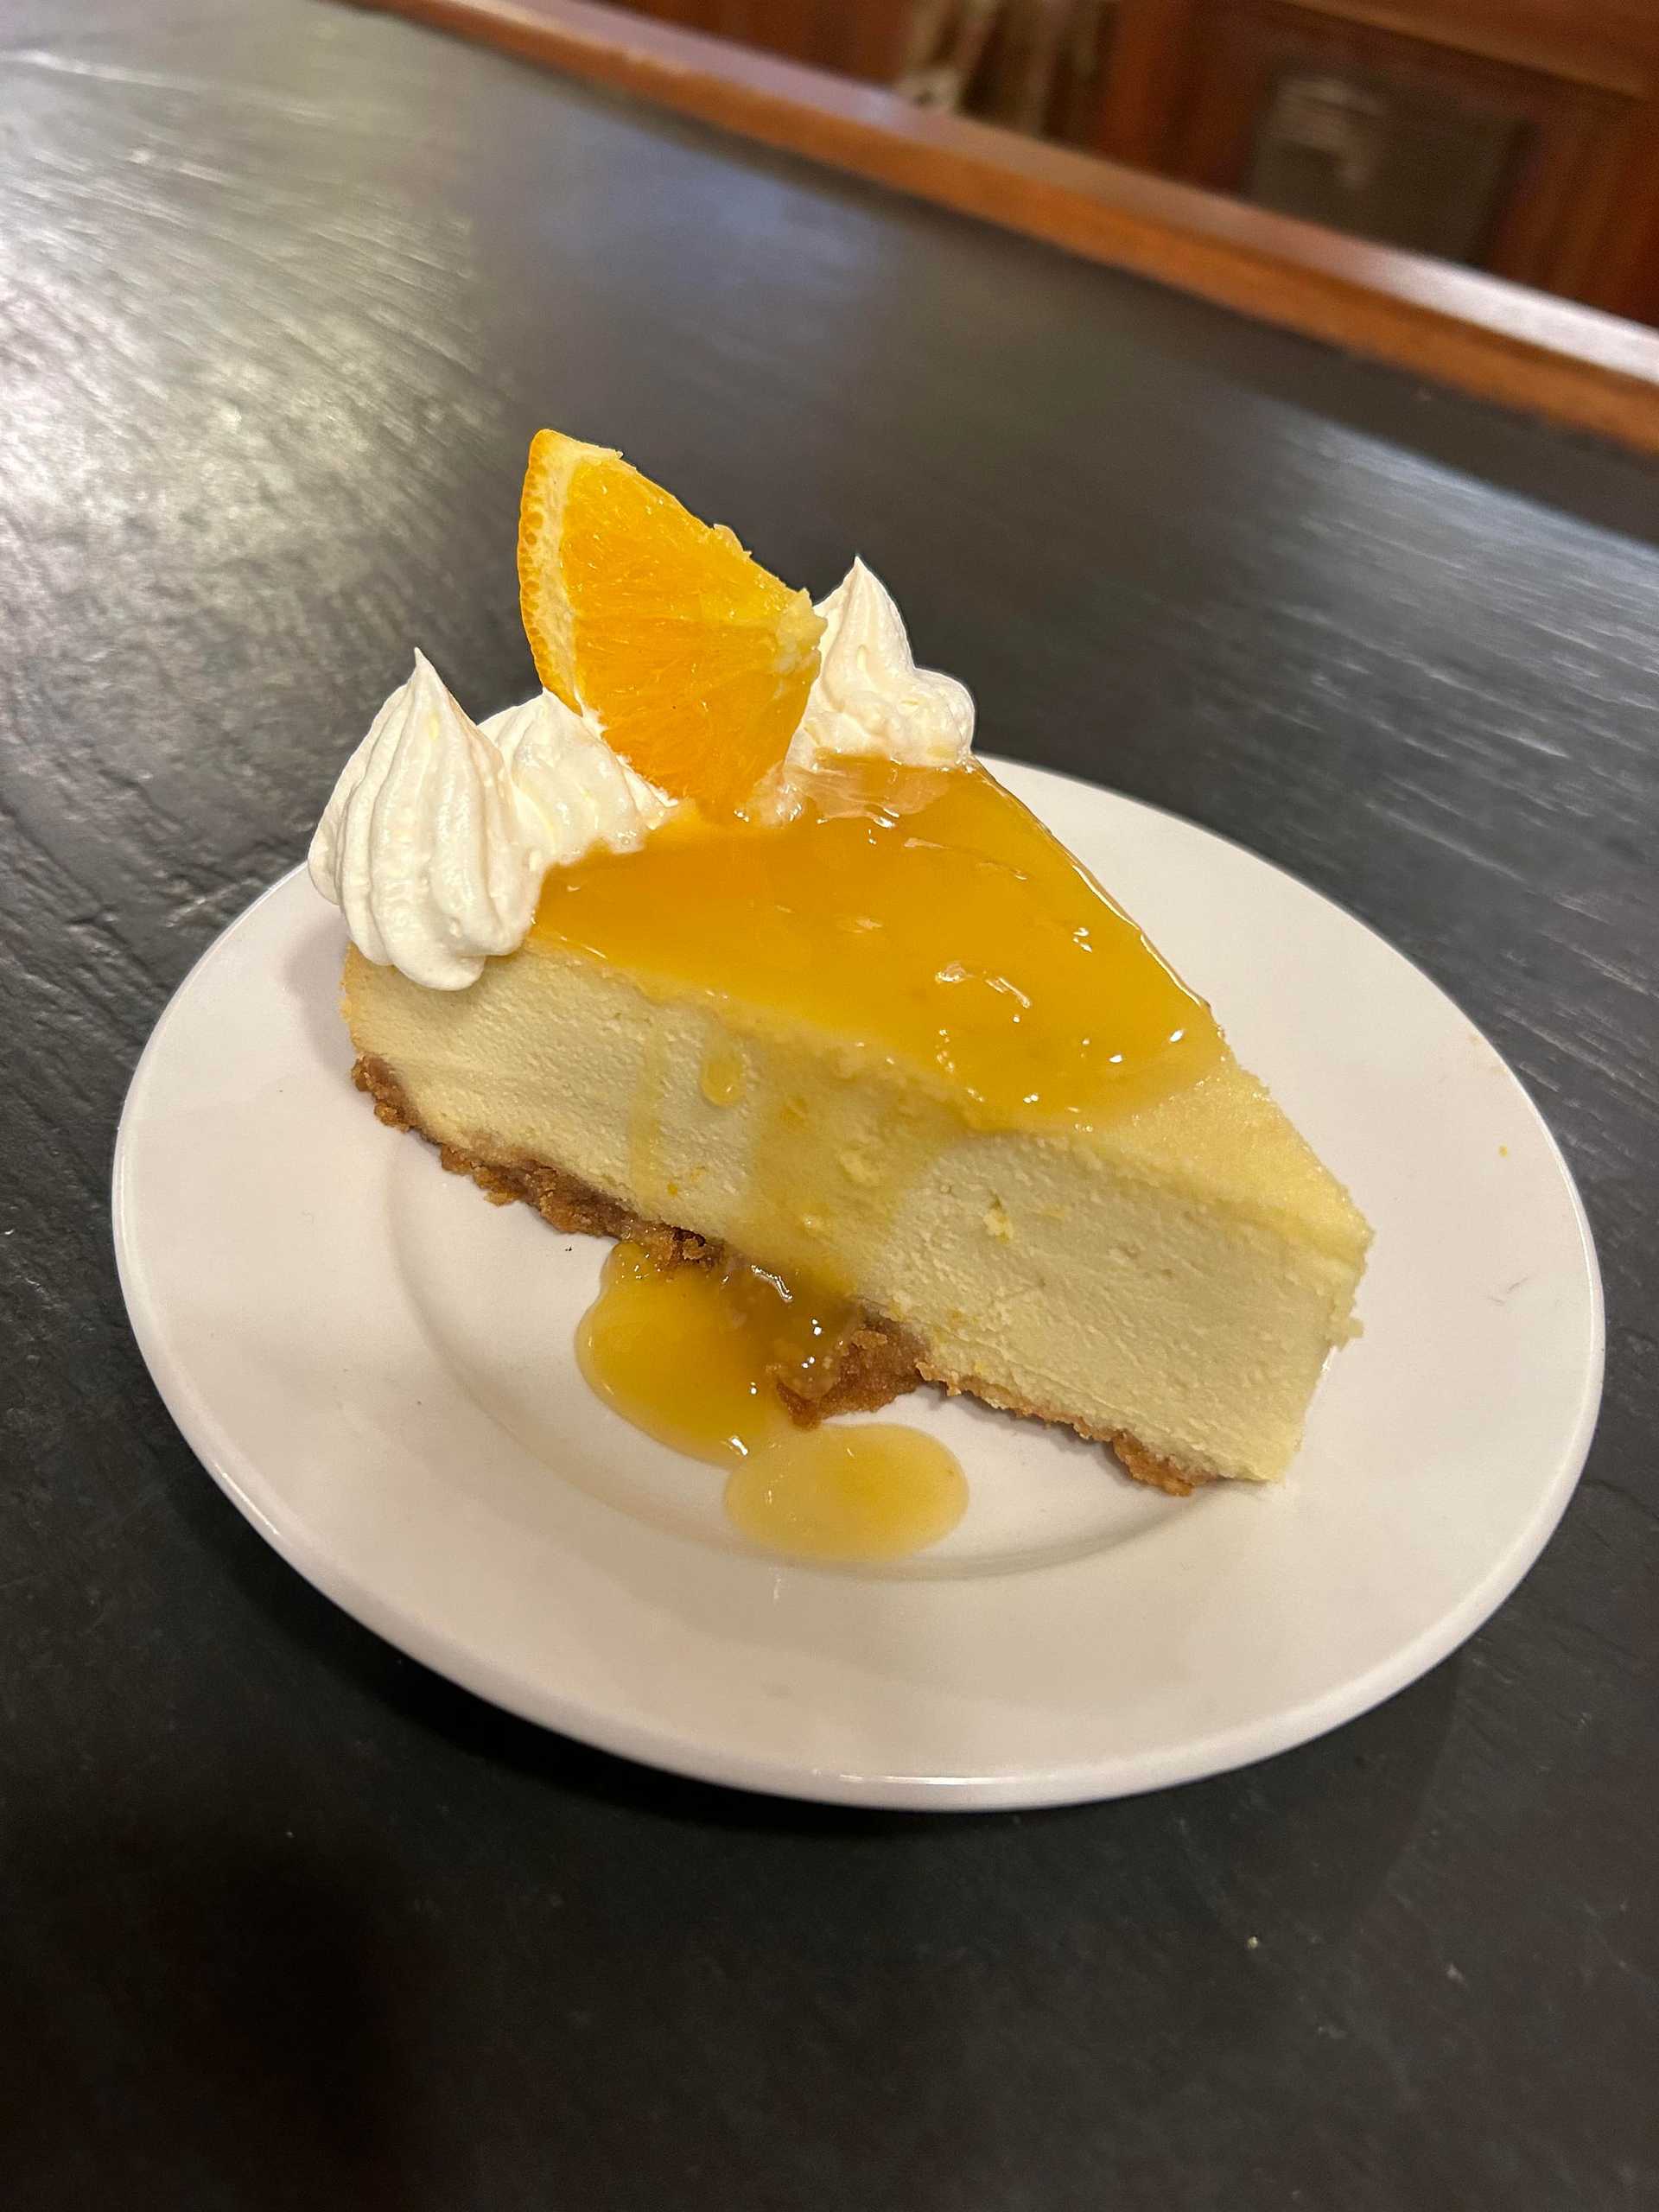 Slice of cheesecake with orange glaze, whipped cream, and a fresh orange slice on top.